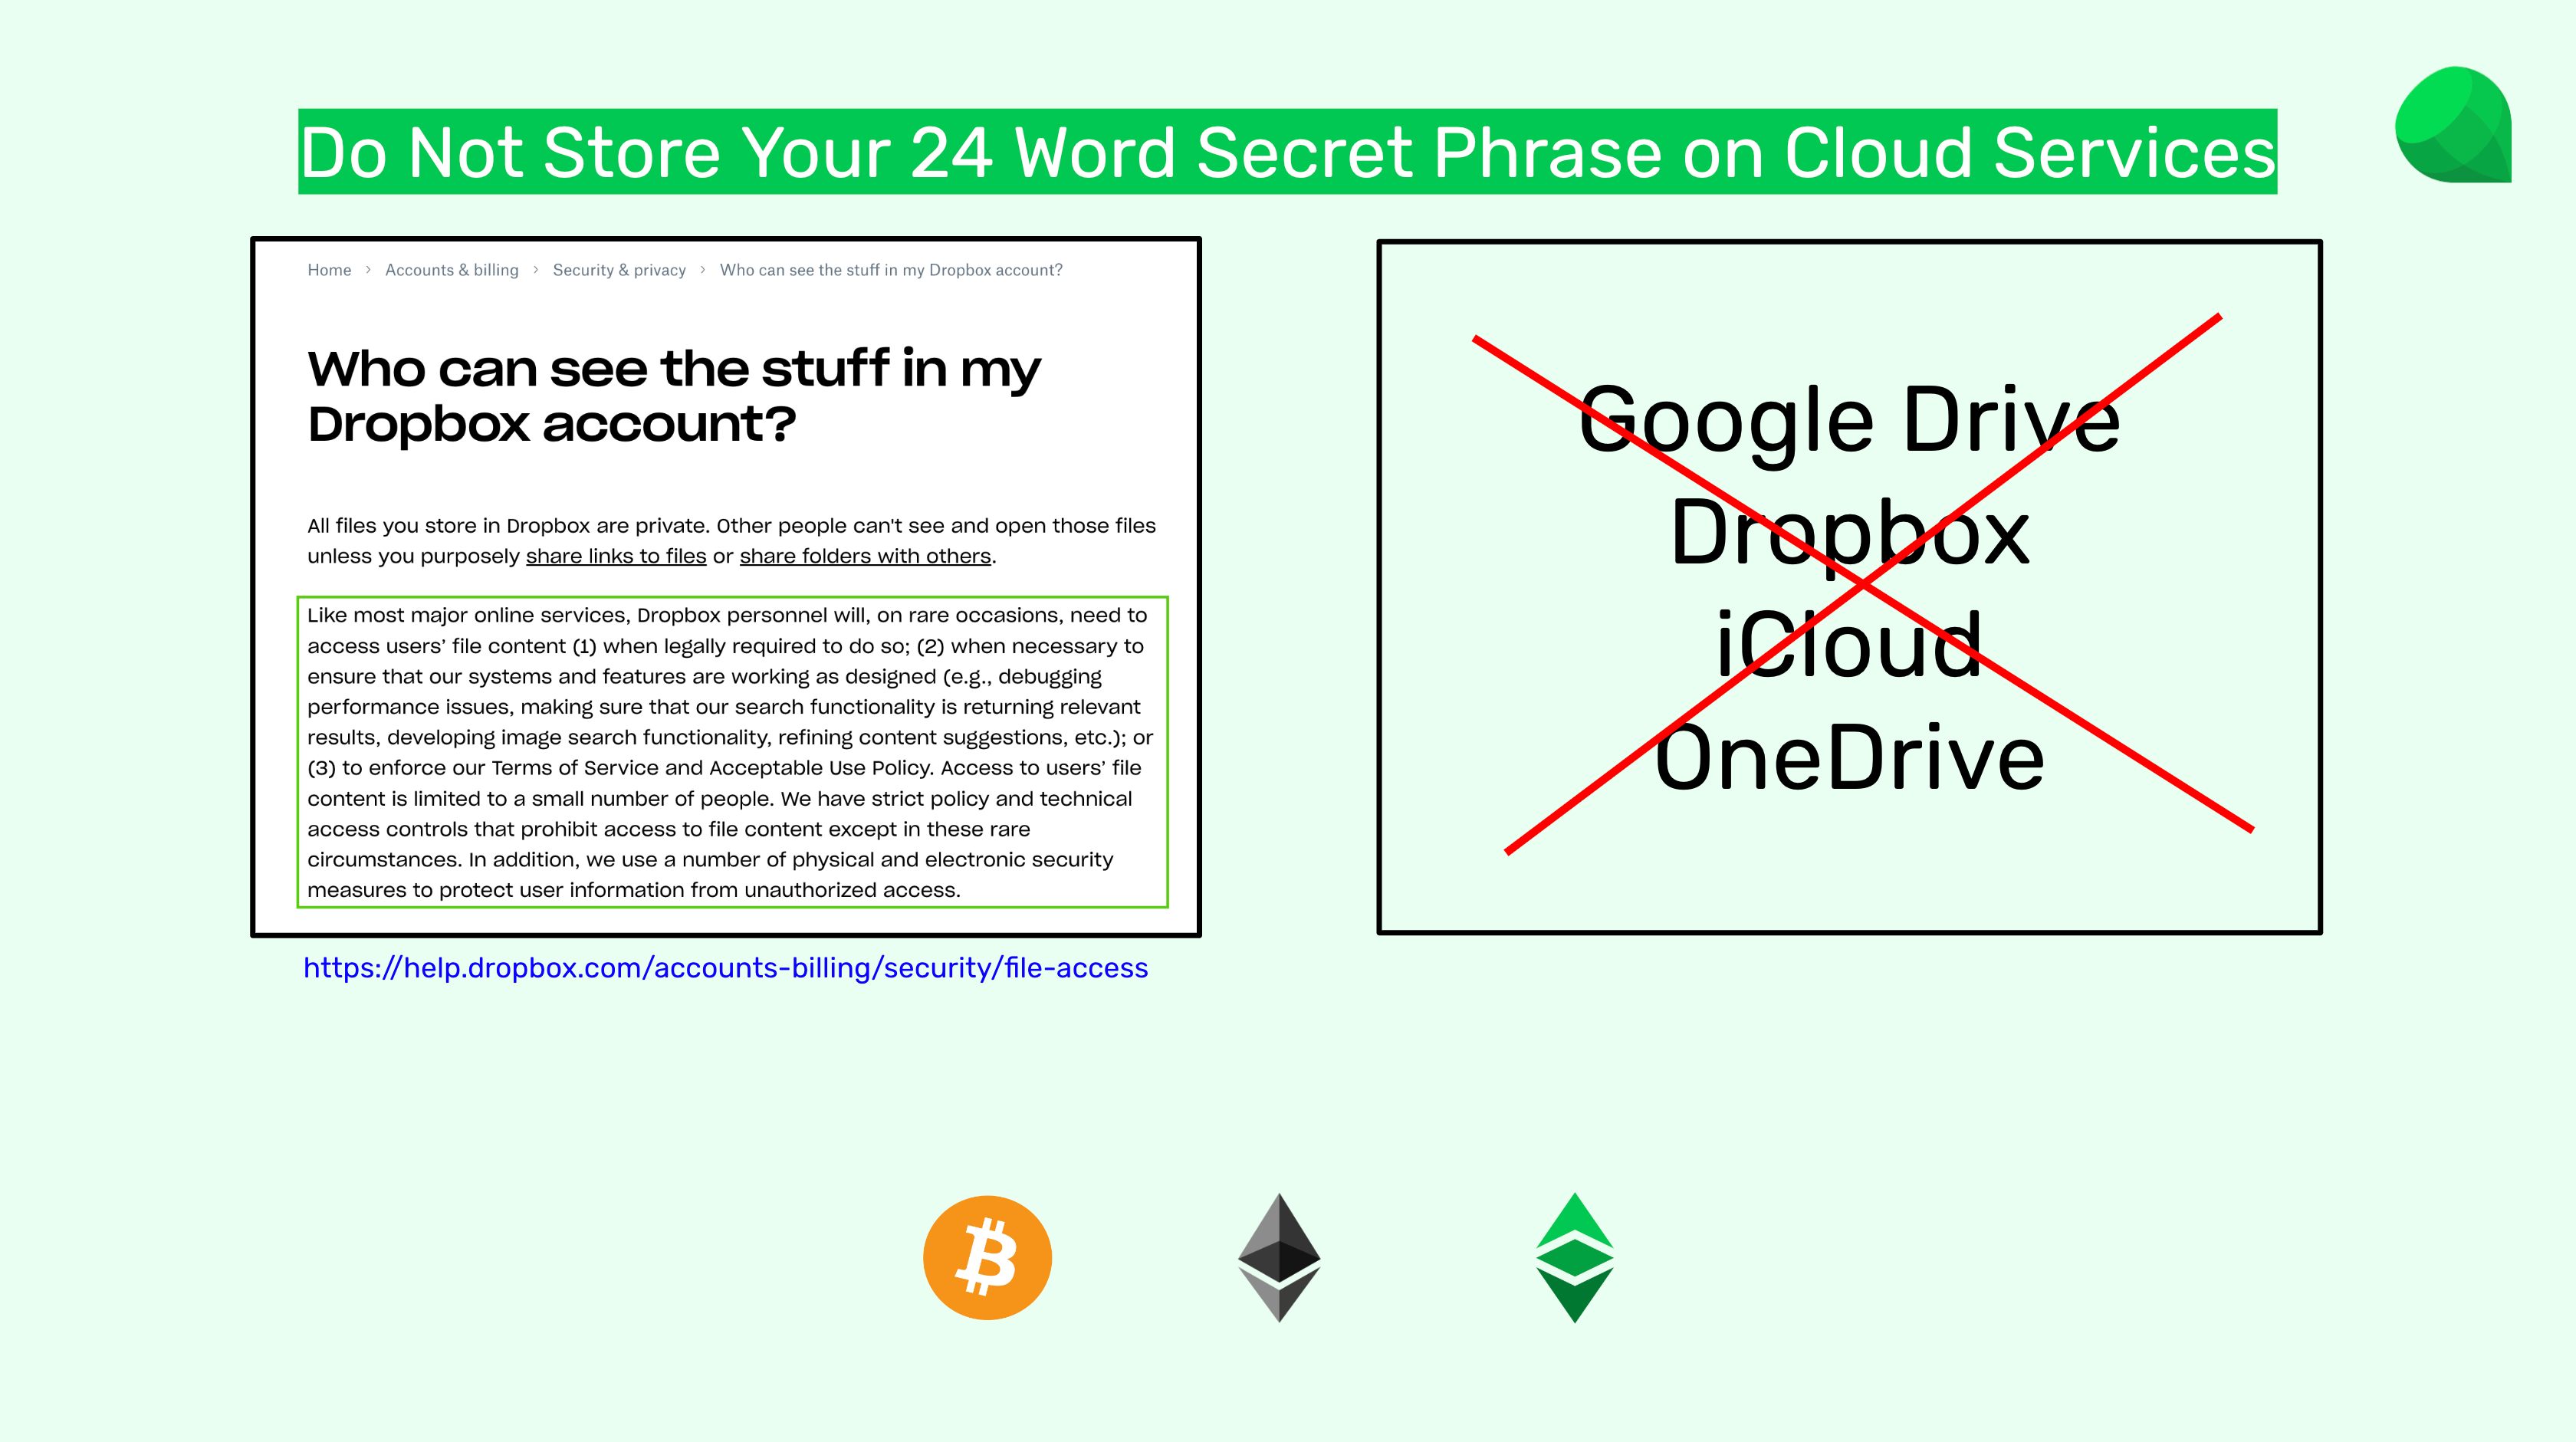 Do not store secret phrases on cloud services.